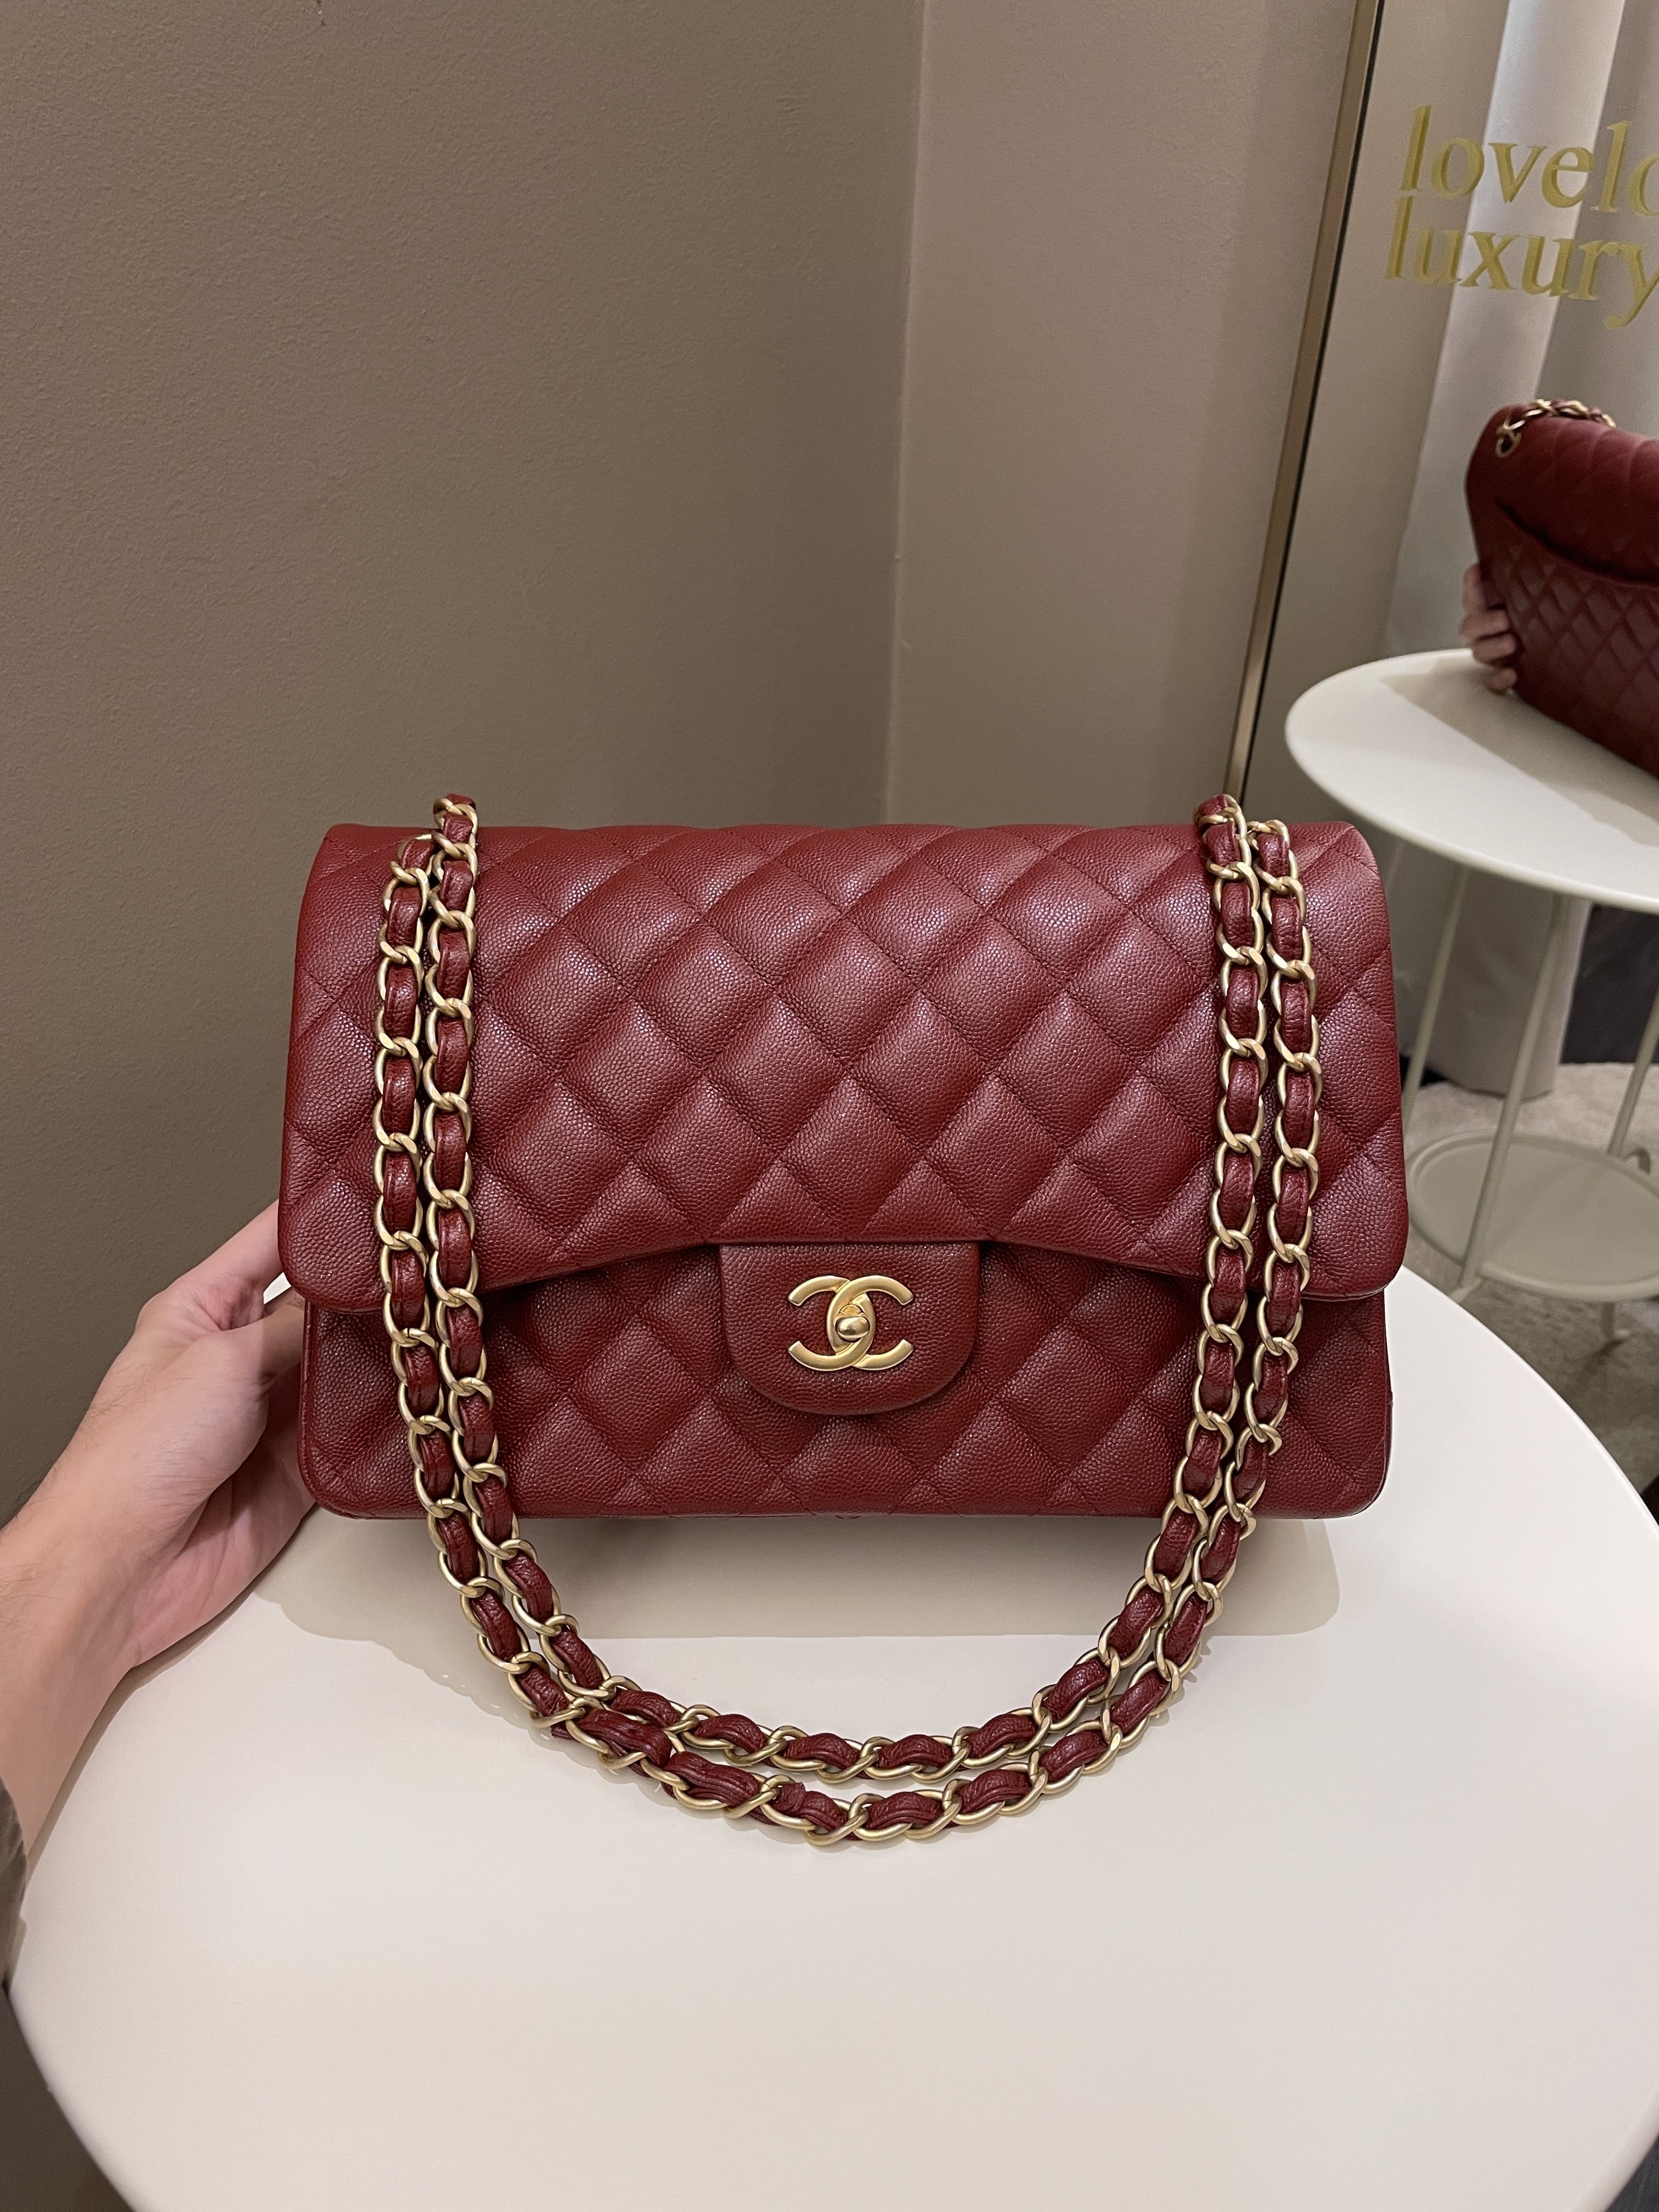 Reveal Chanel Mini Square Bag in Burgundy  YouTube